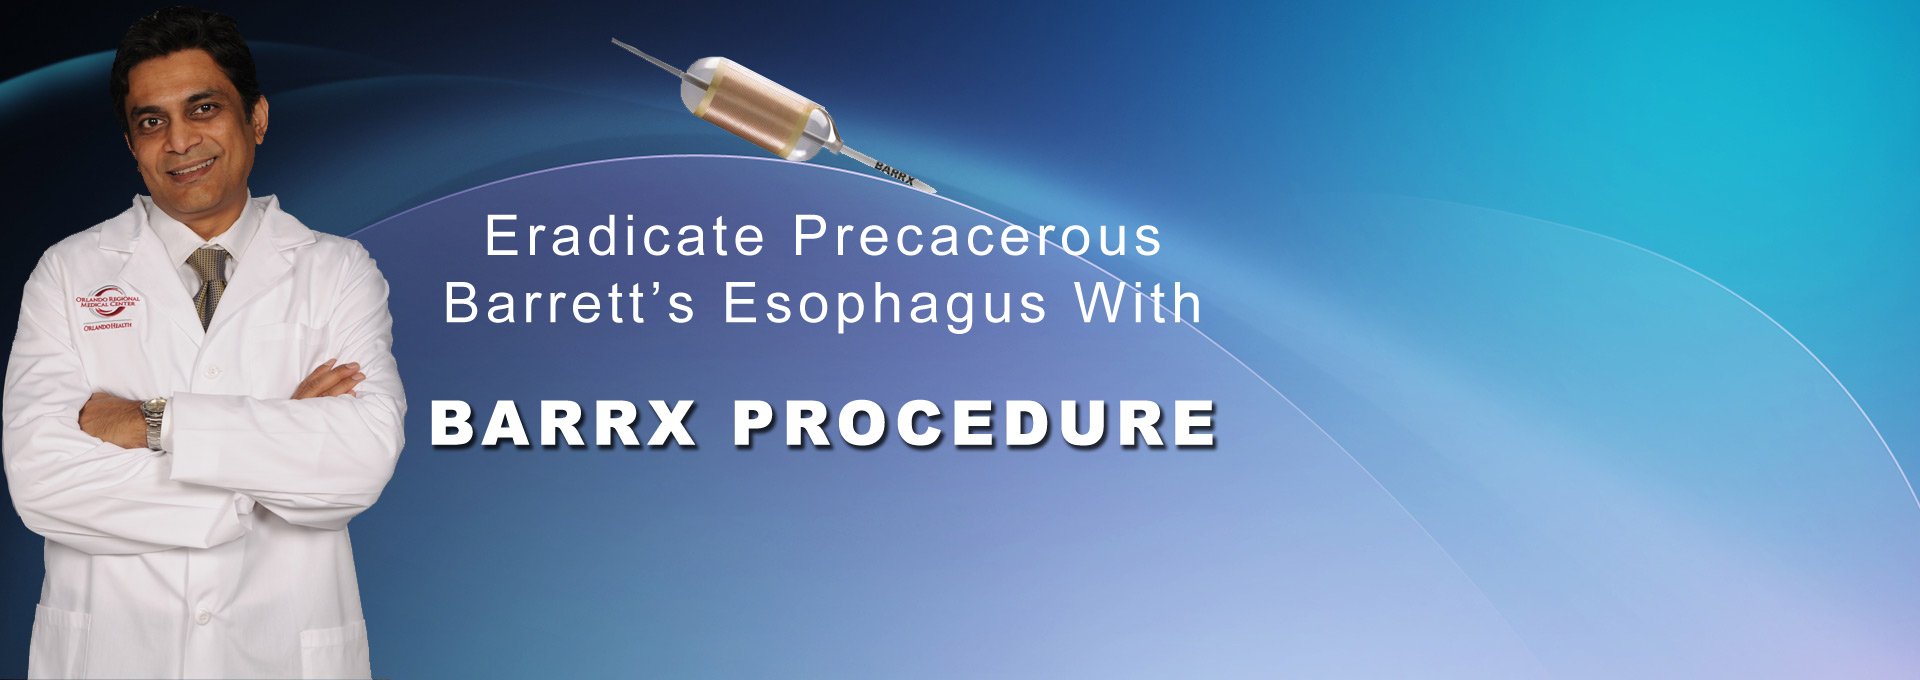 Barrx Procedure at Gastroenterology Nutrition Specialists